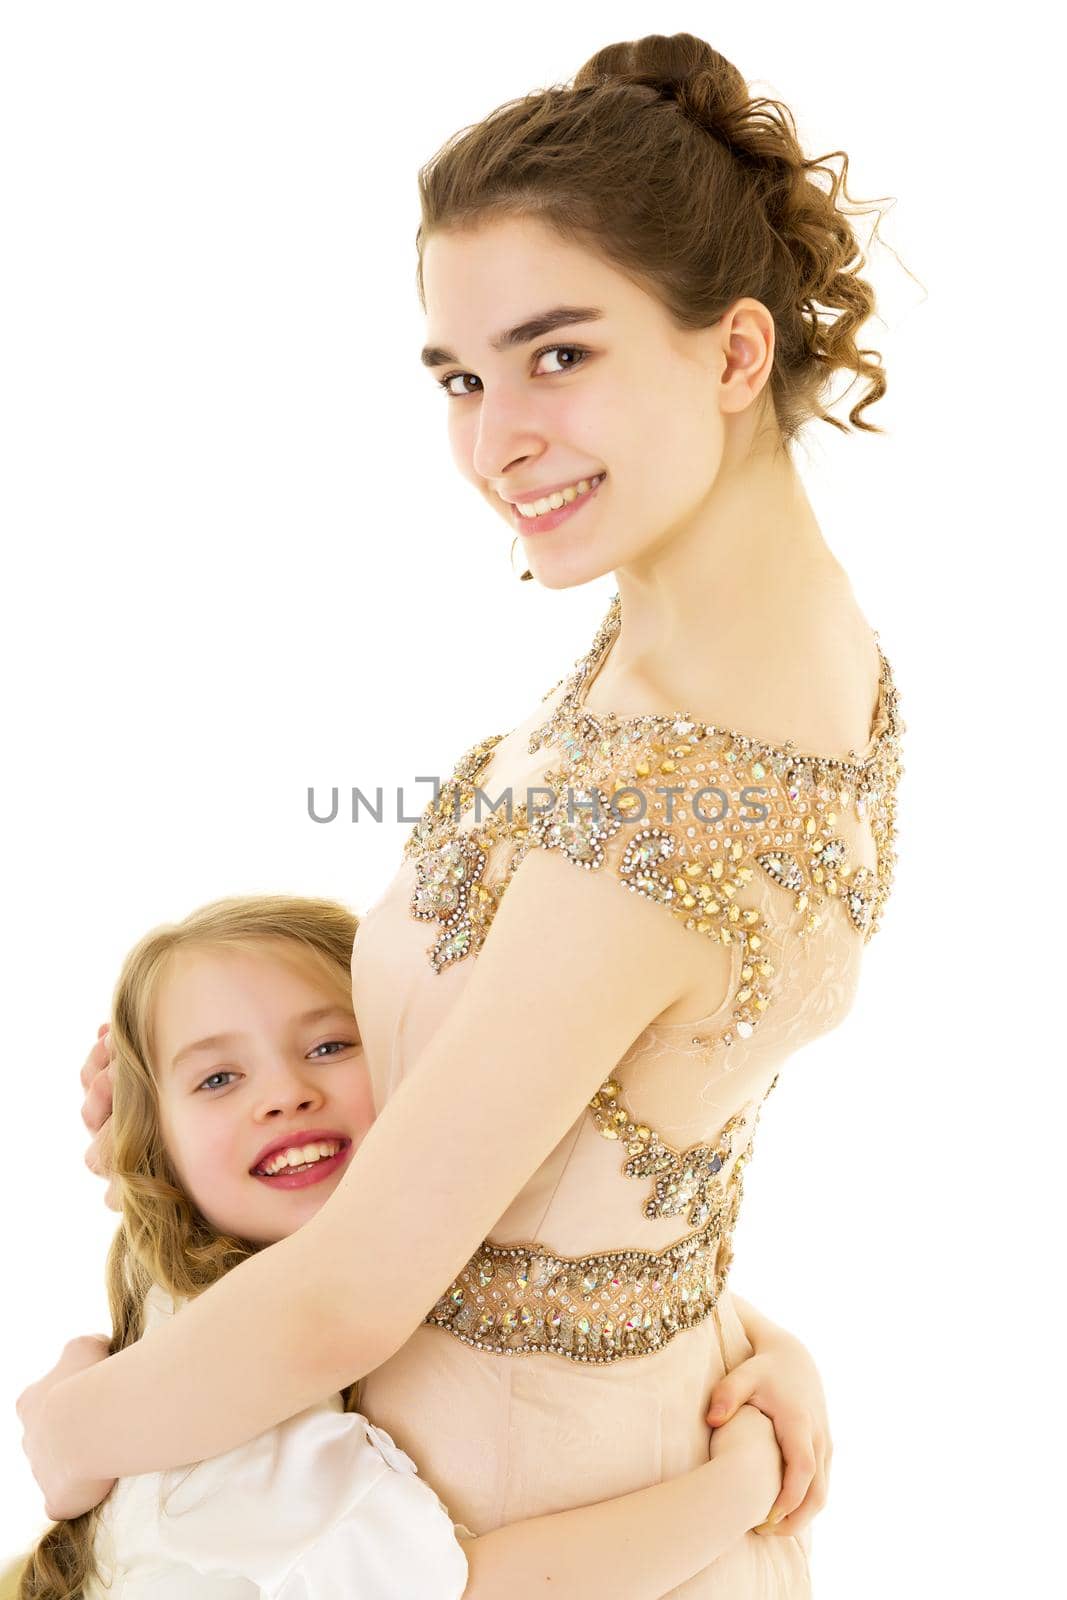 A young girl hugs her little sister. by kolesnikov_studio